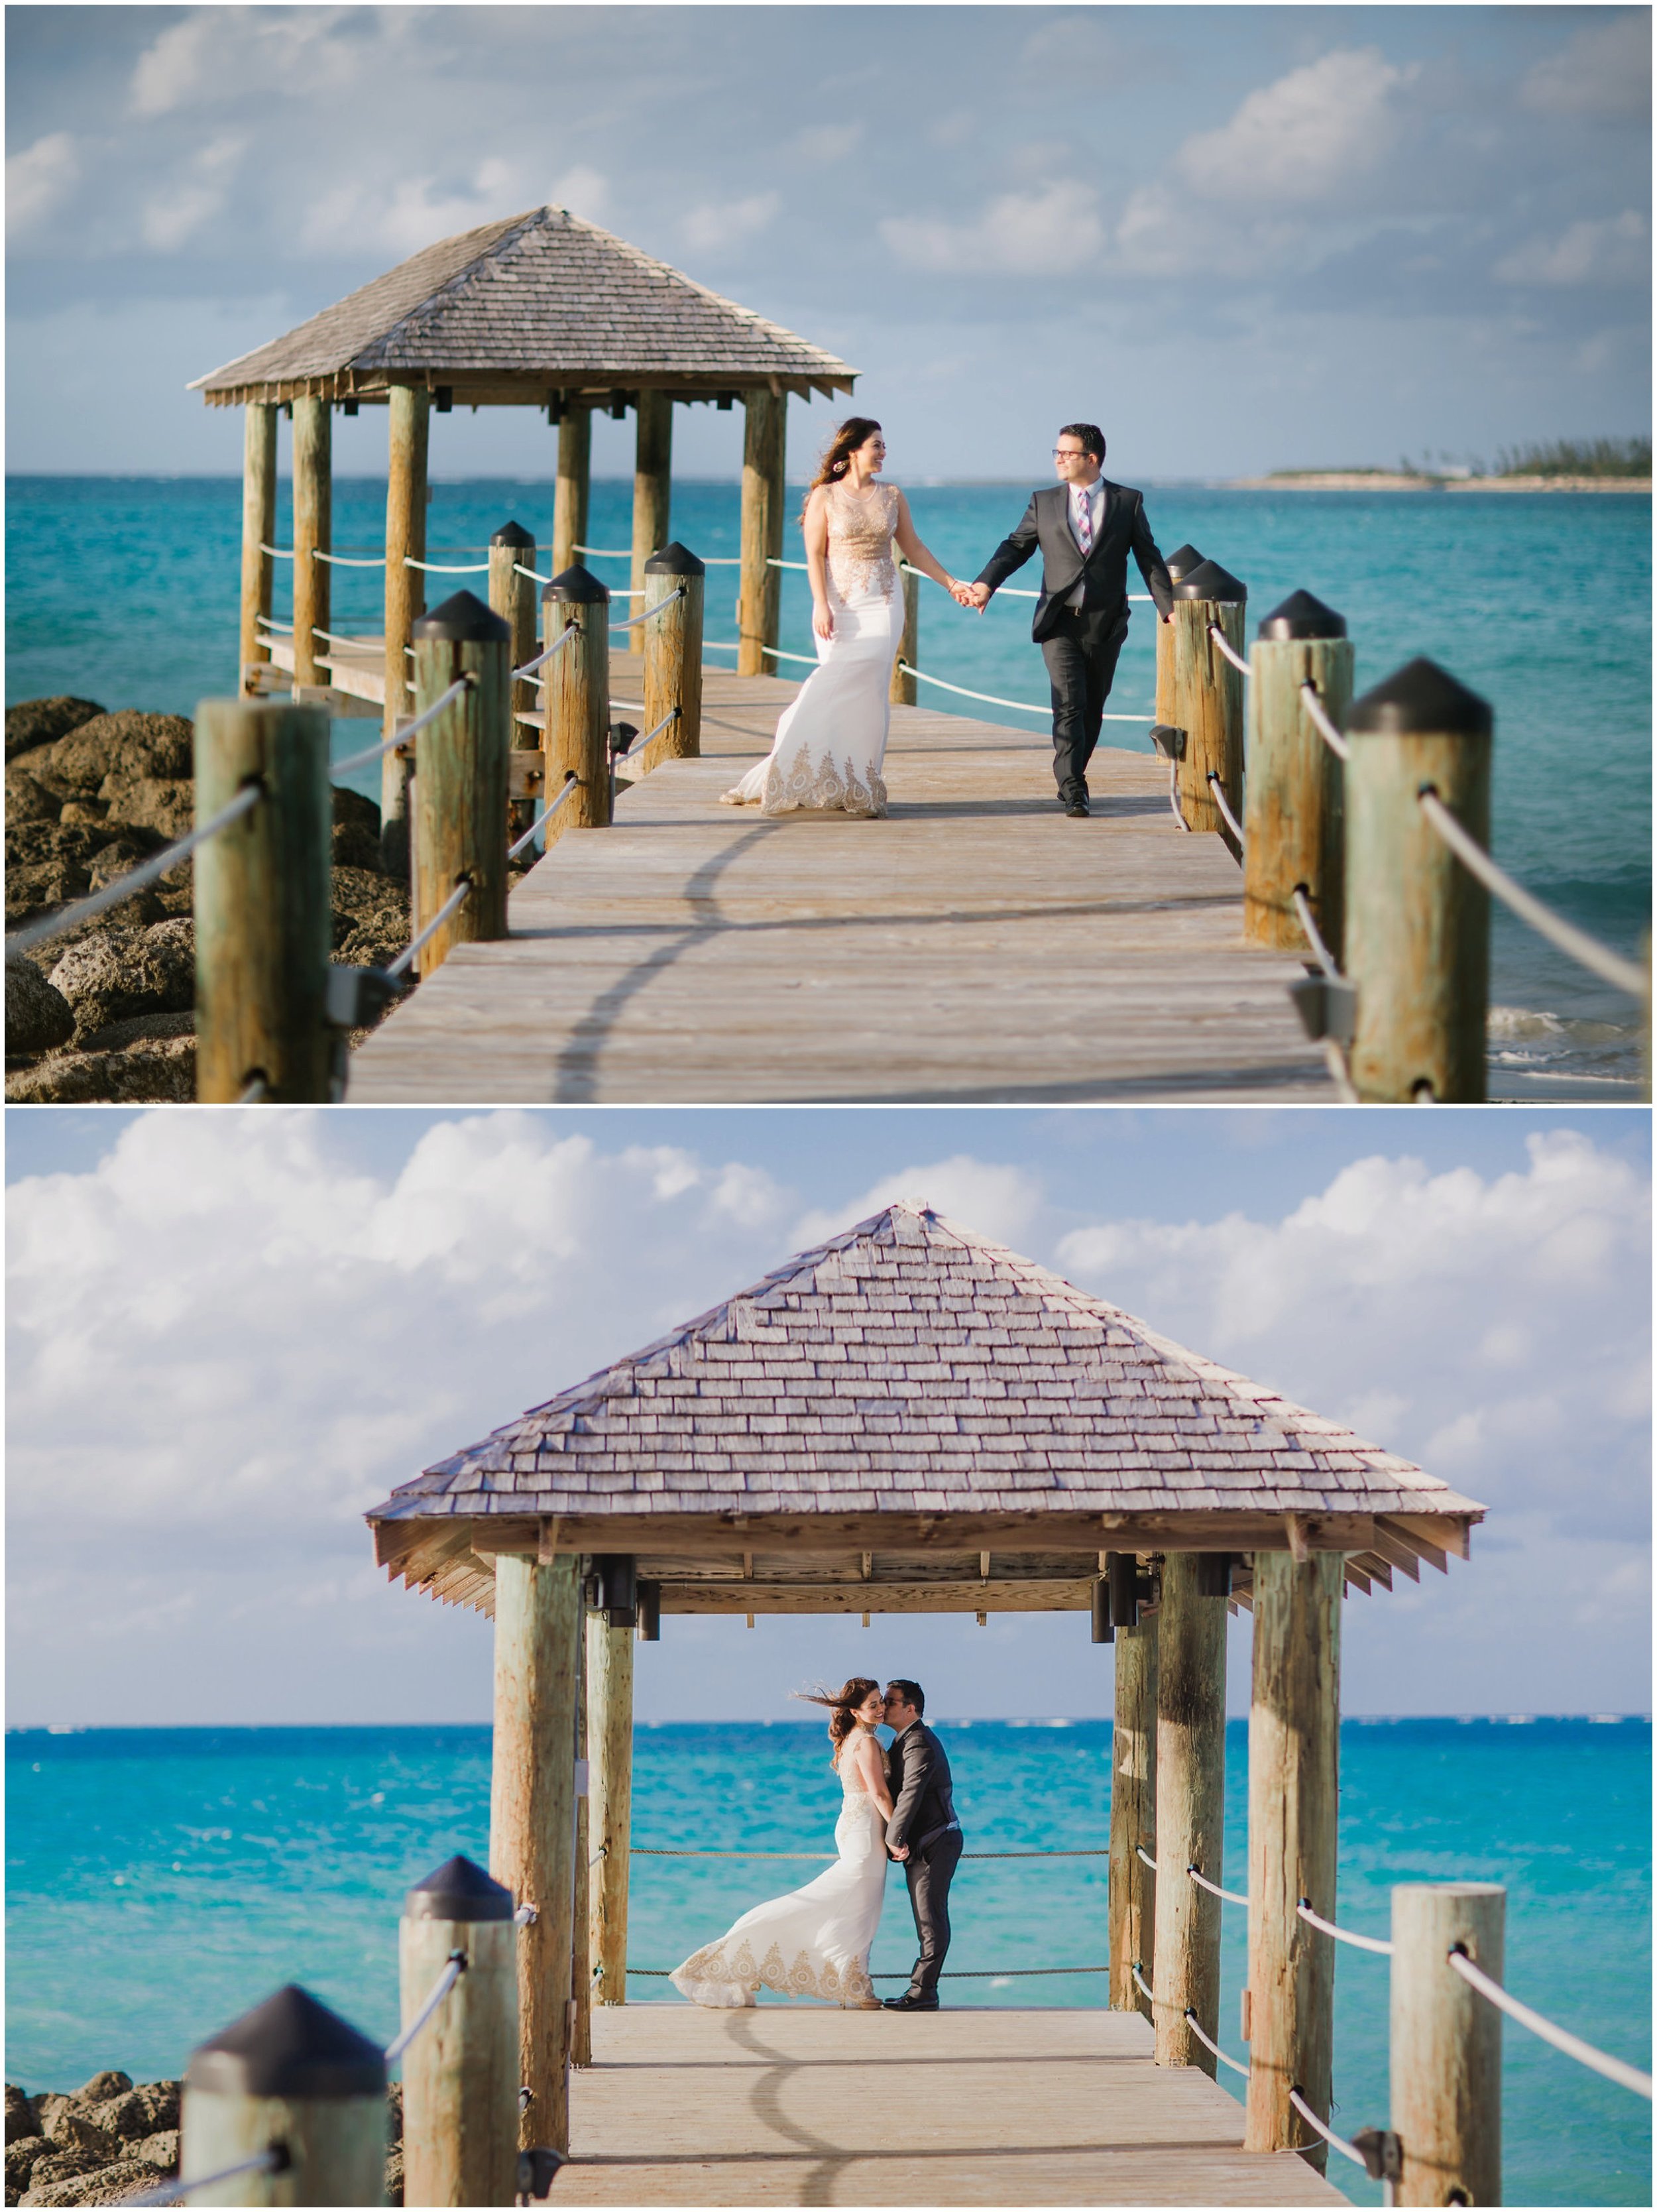 Le Cape Weddings- Destination Wedding Photography -ShayanandNikkie-2-X3_LuxuryDestinationPhotographer.jpg